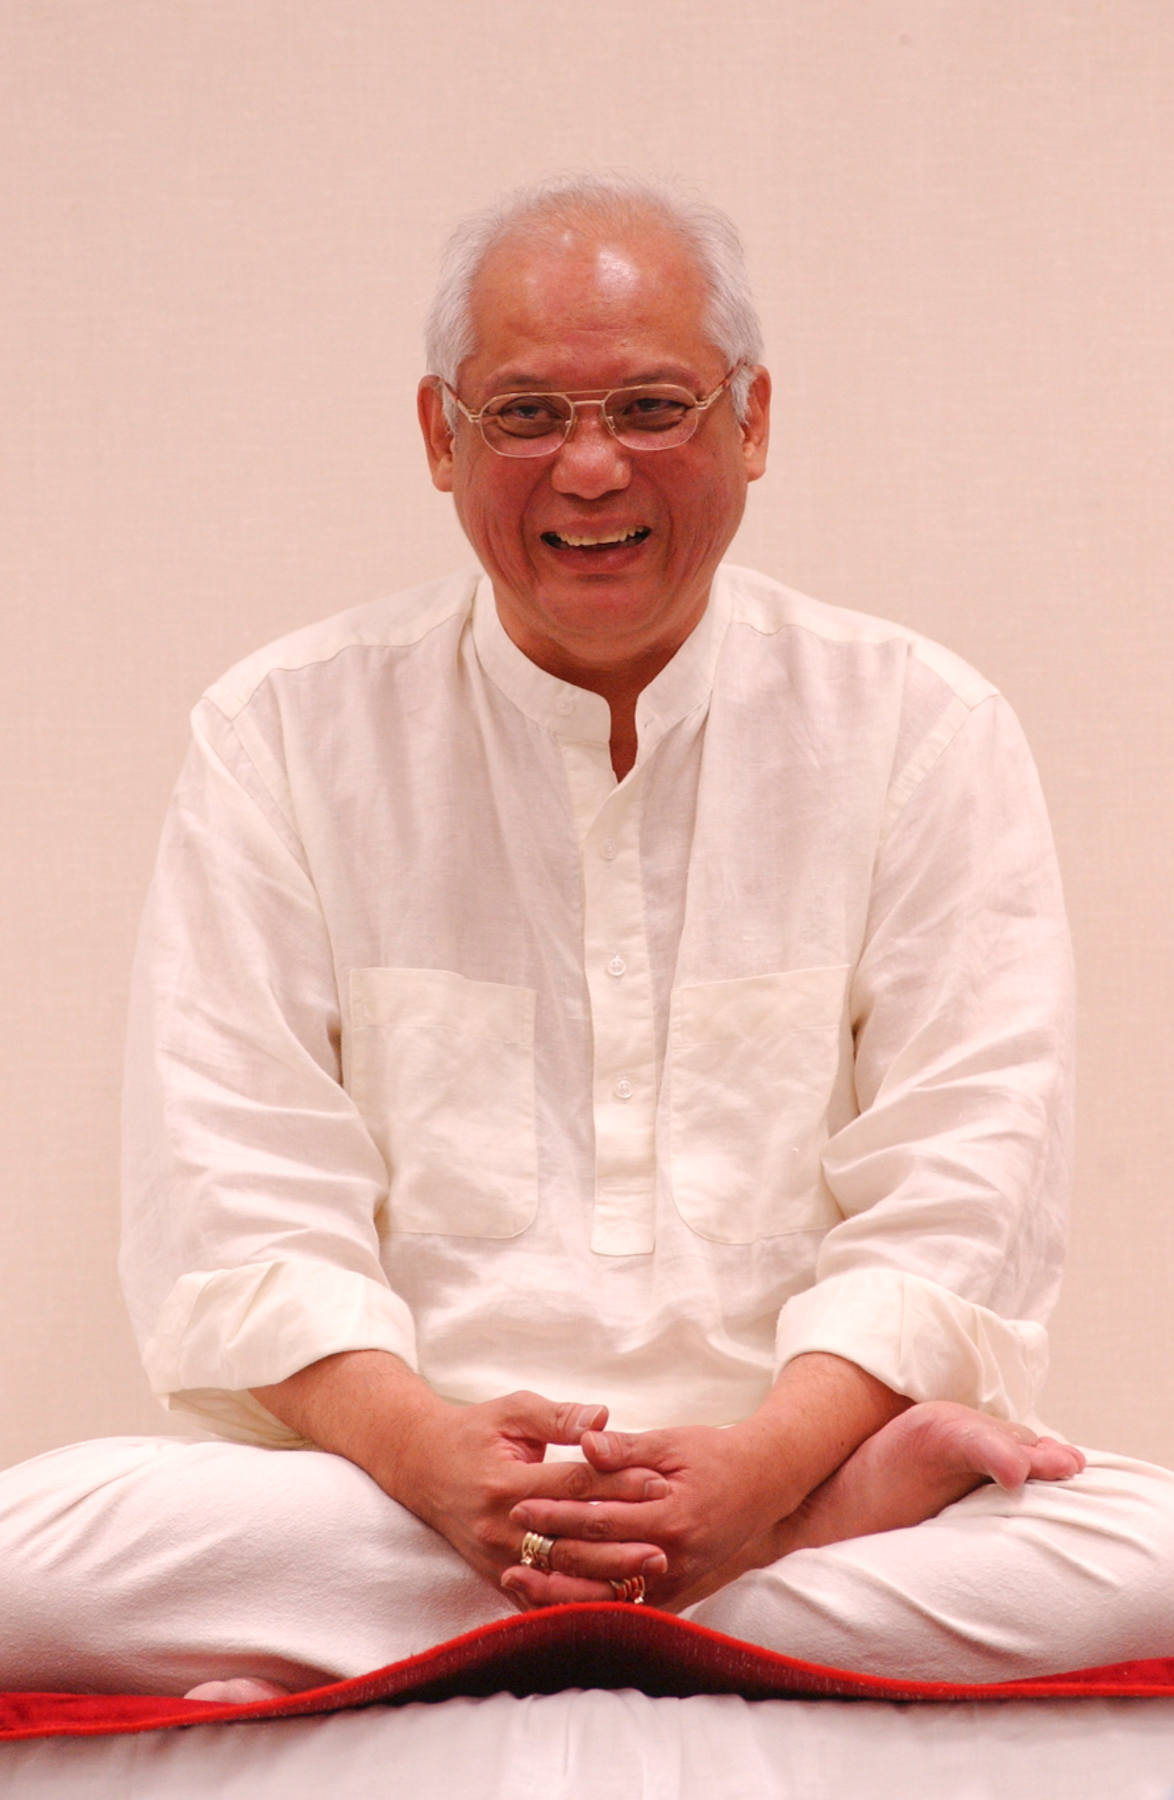 Grand Master Choa Kok Sui in lotus pose and smiling